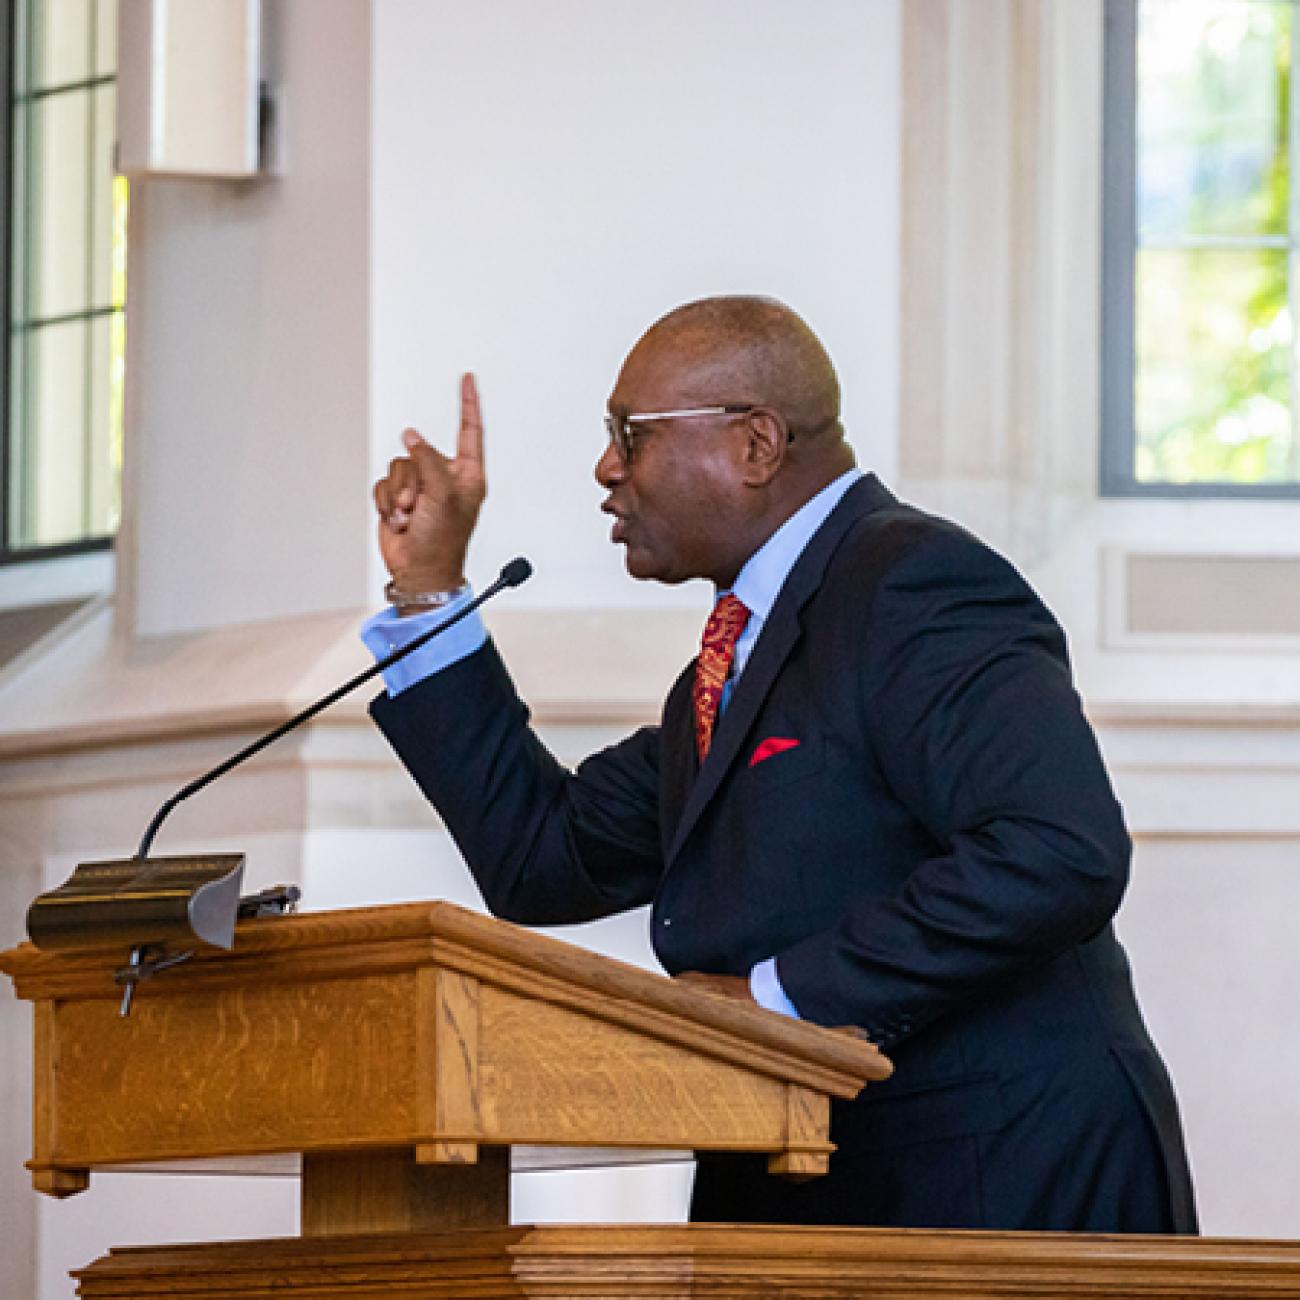 A preacher speaks from the pulpit in the Duke Divinity School chapel.